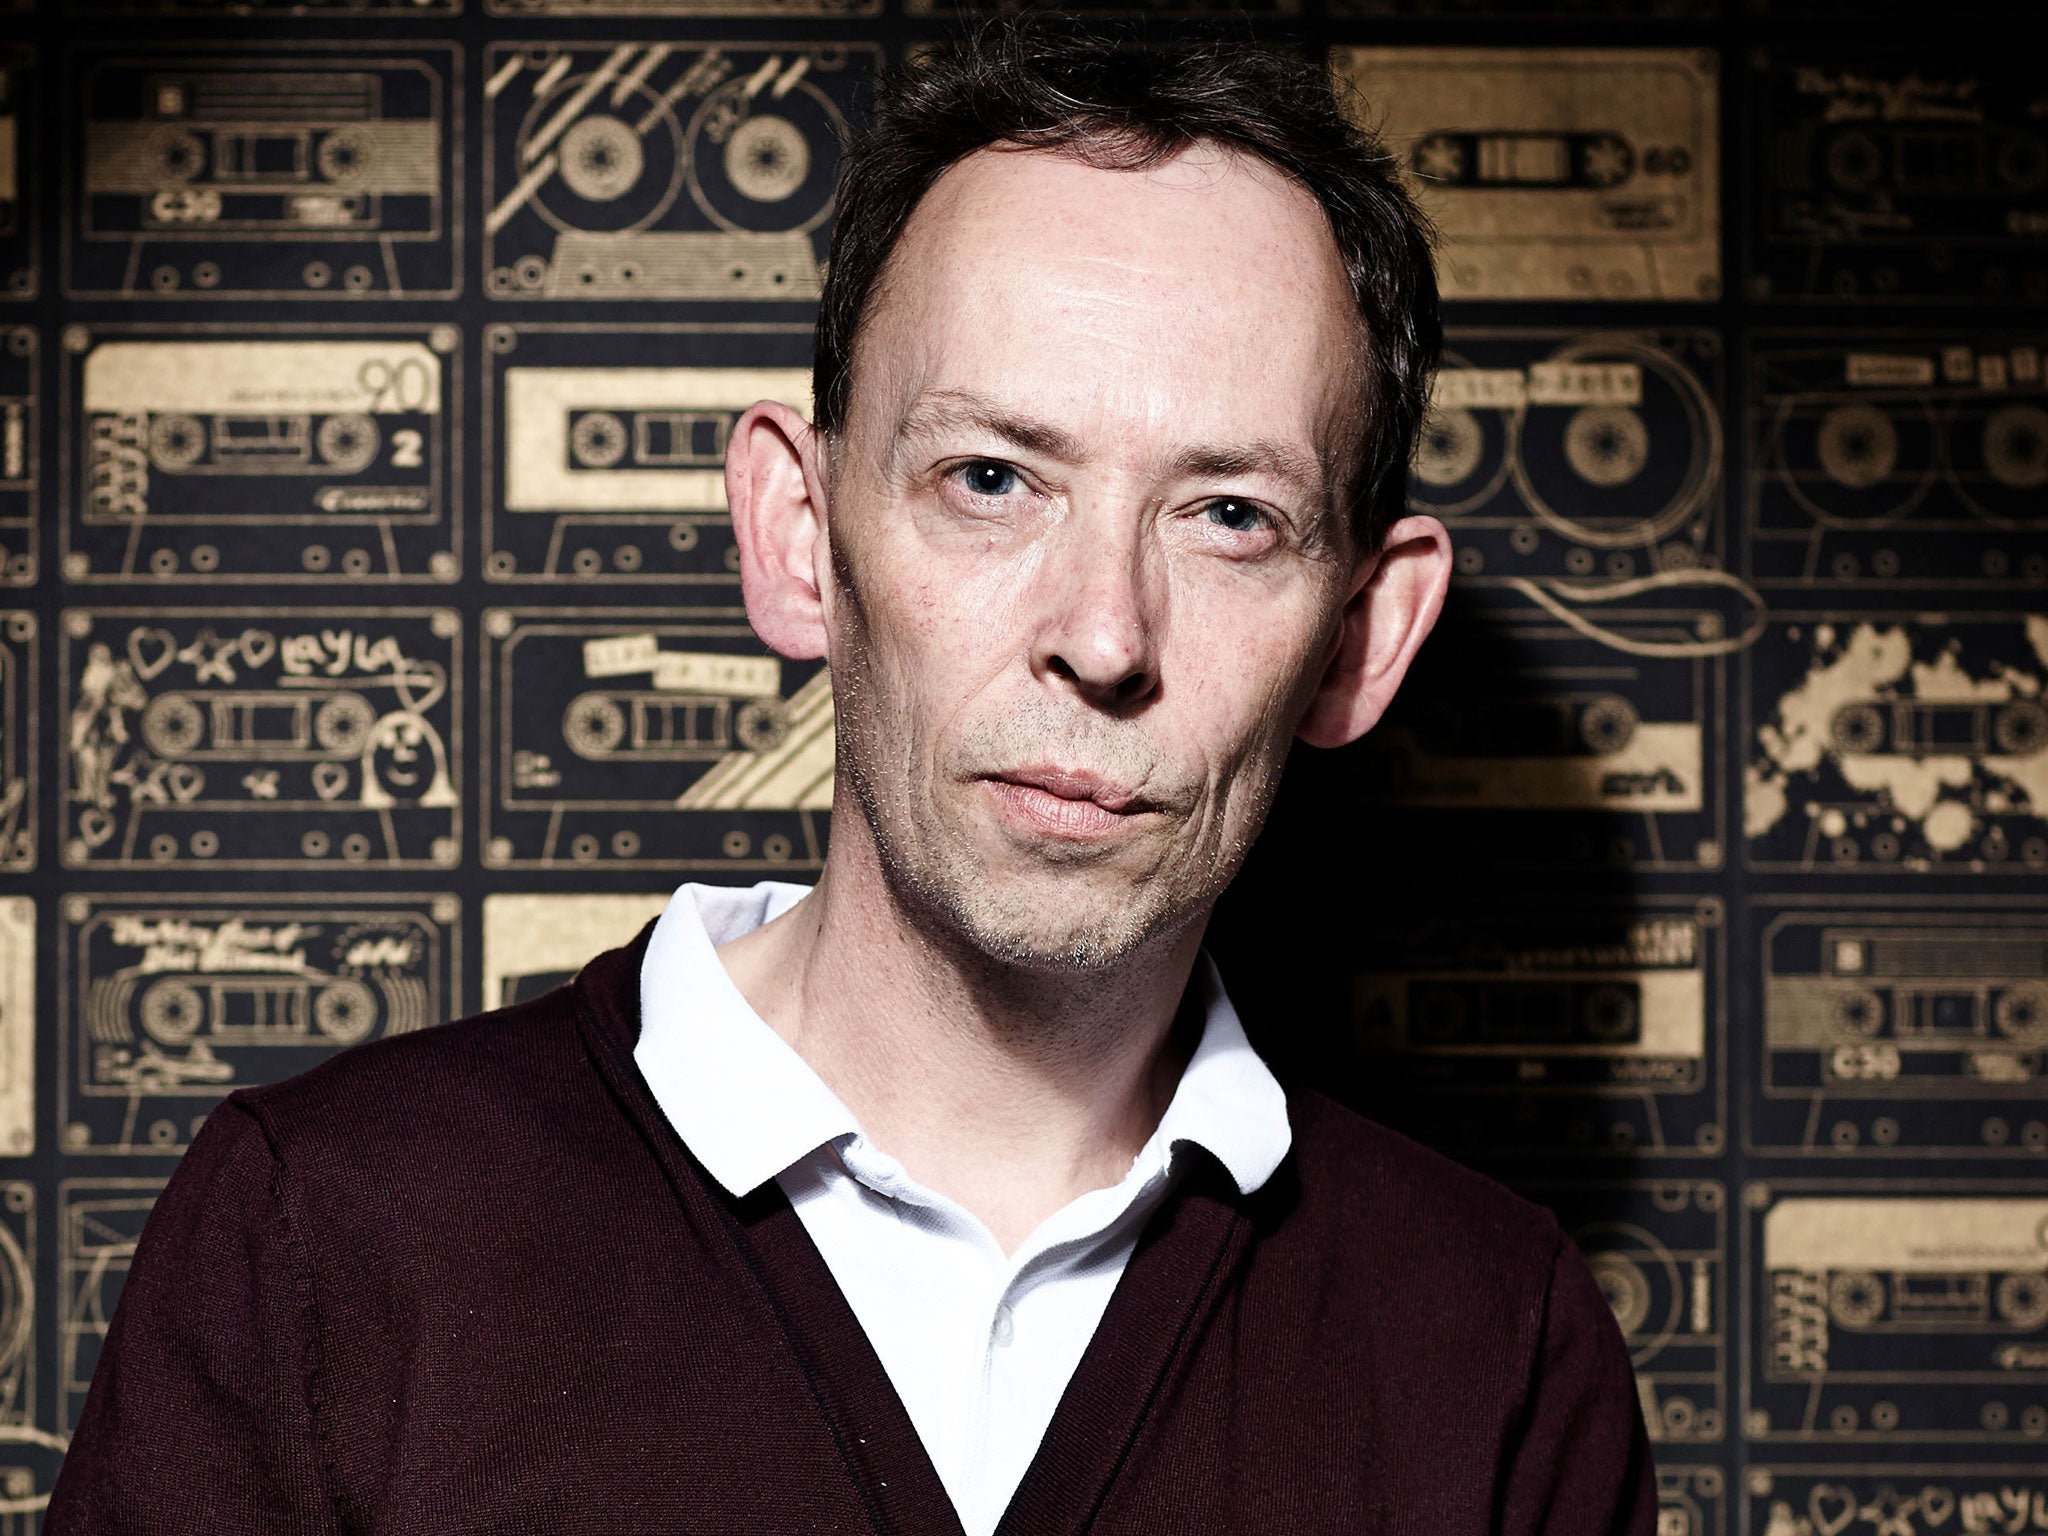 Taste-maker: Steve Lamacq, now at 6 Music, began his BBC career at Radio 1